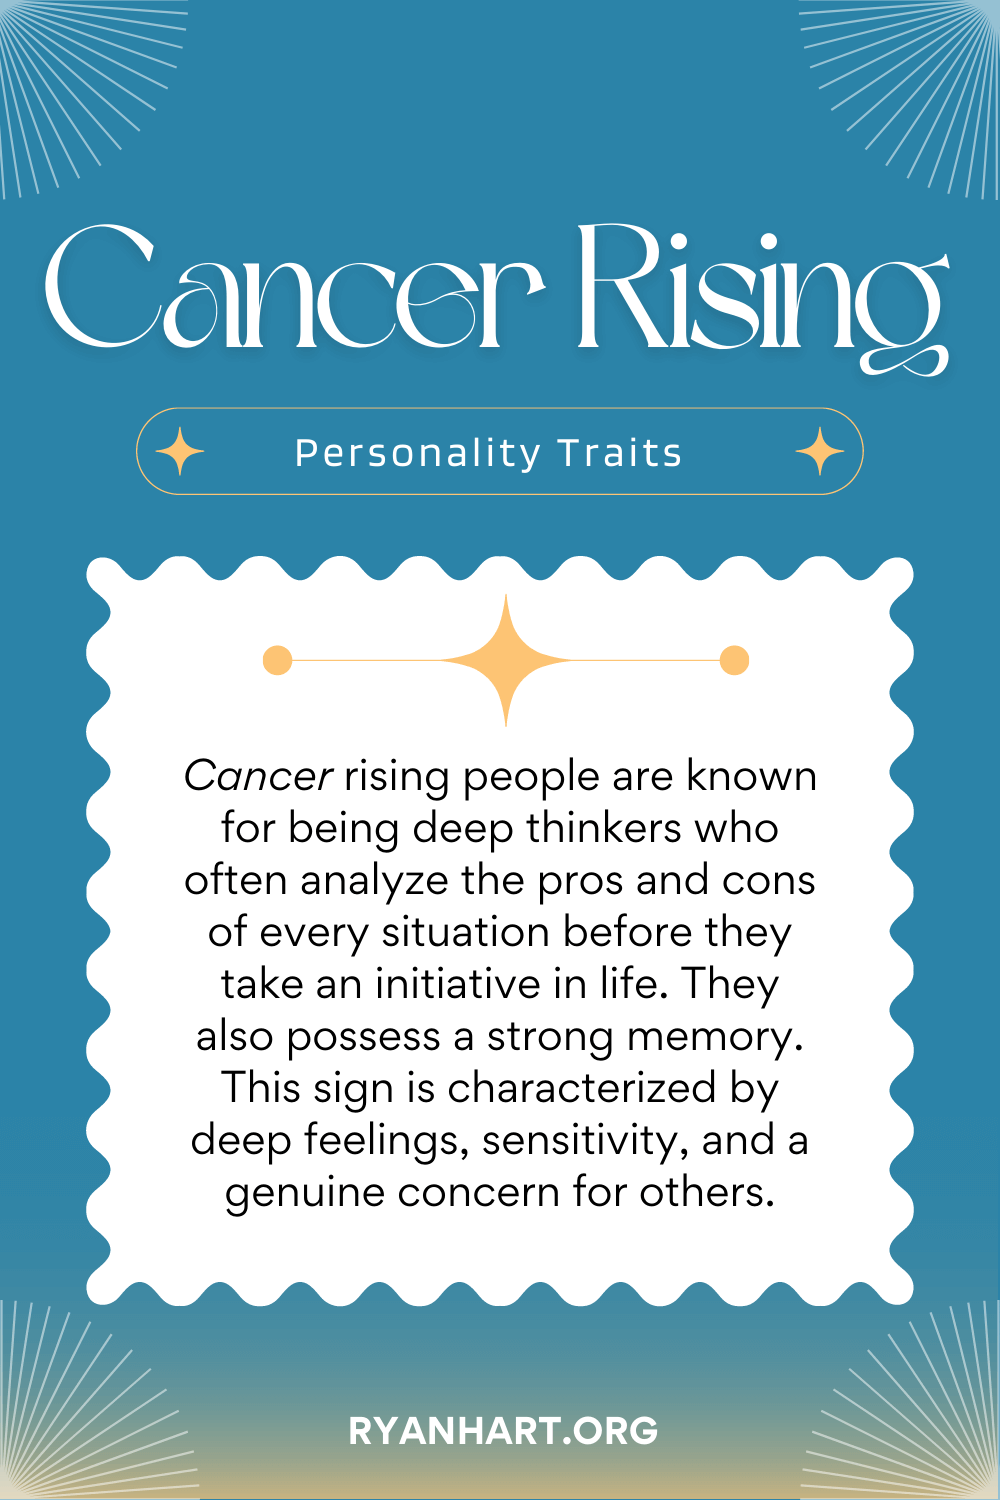  Kanker Rising jeung Tret Personality Ascendant